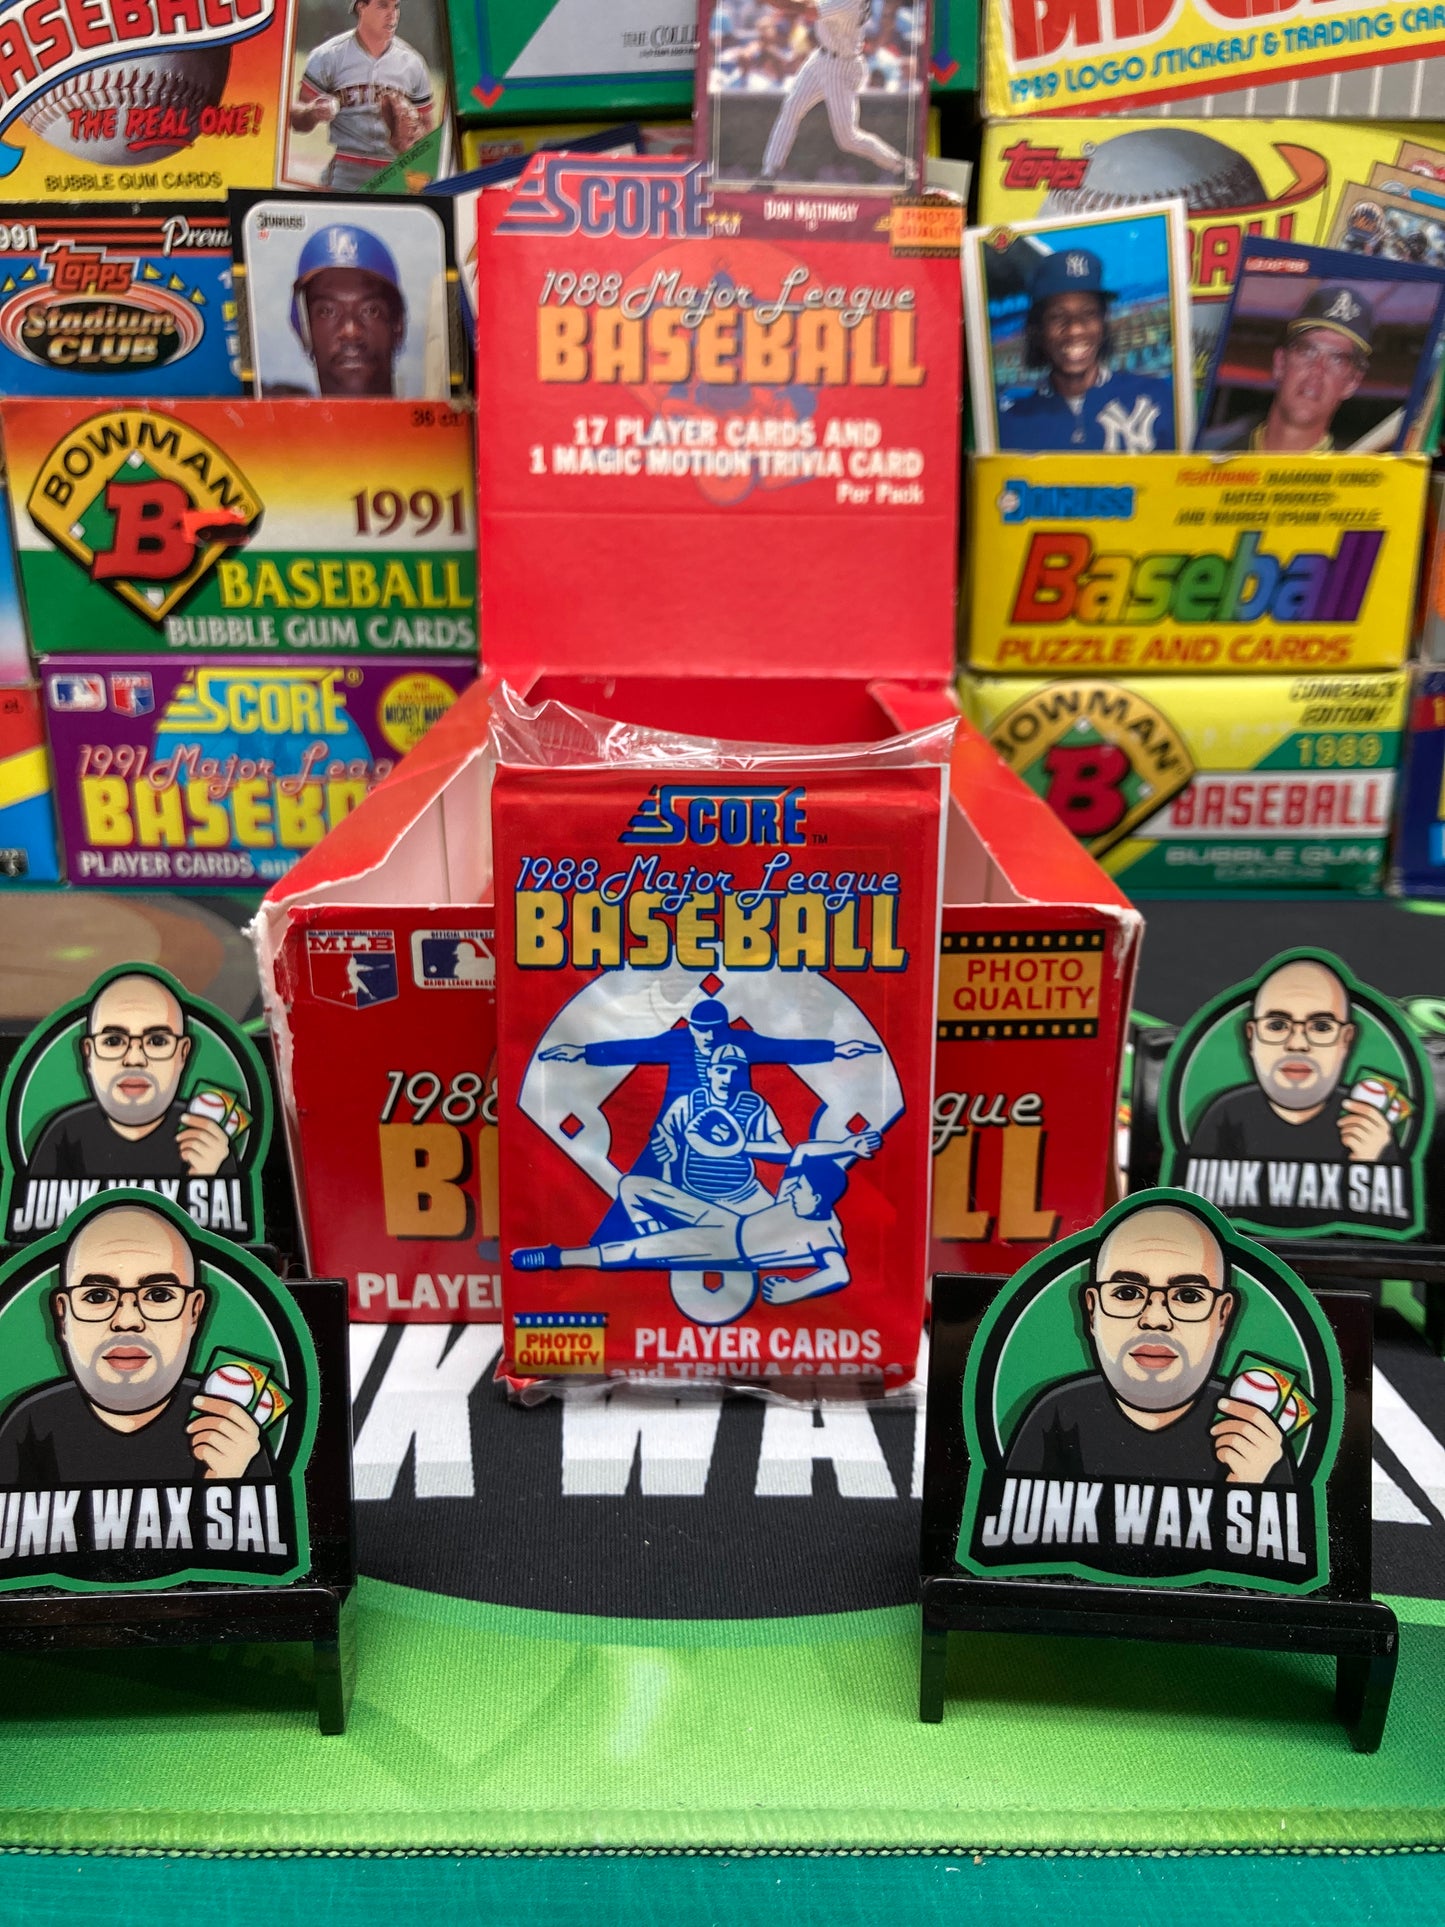 1988 Score Baseball Pack